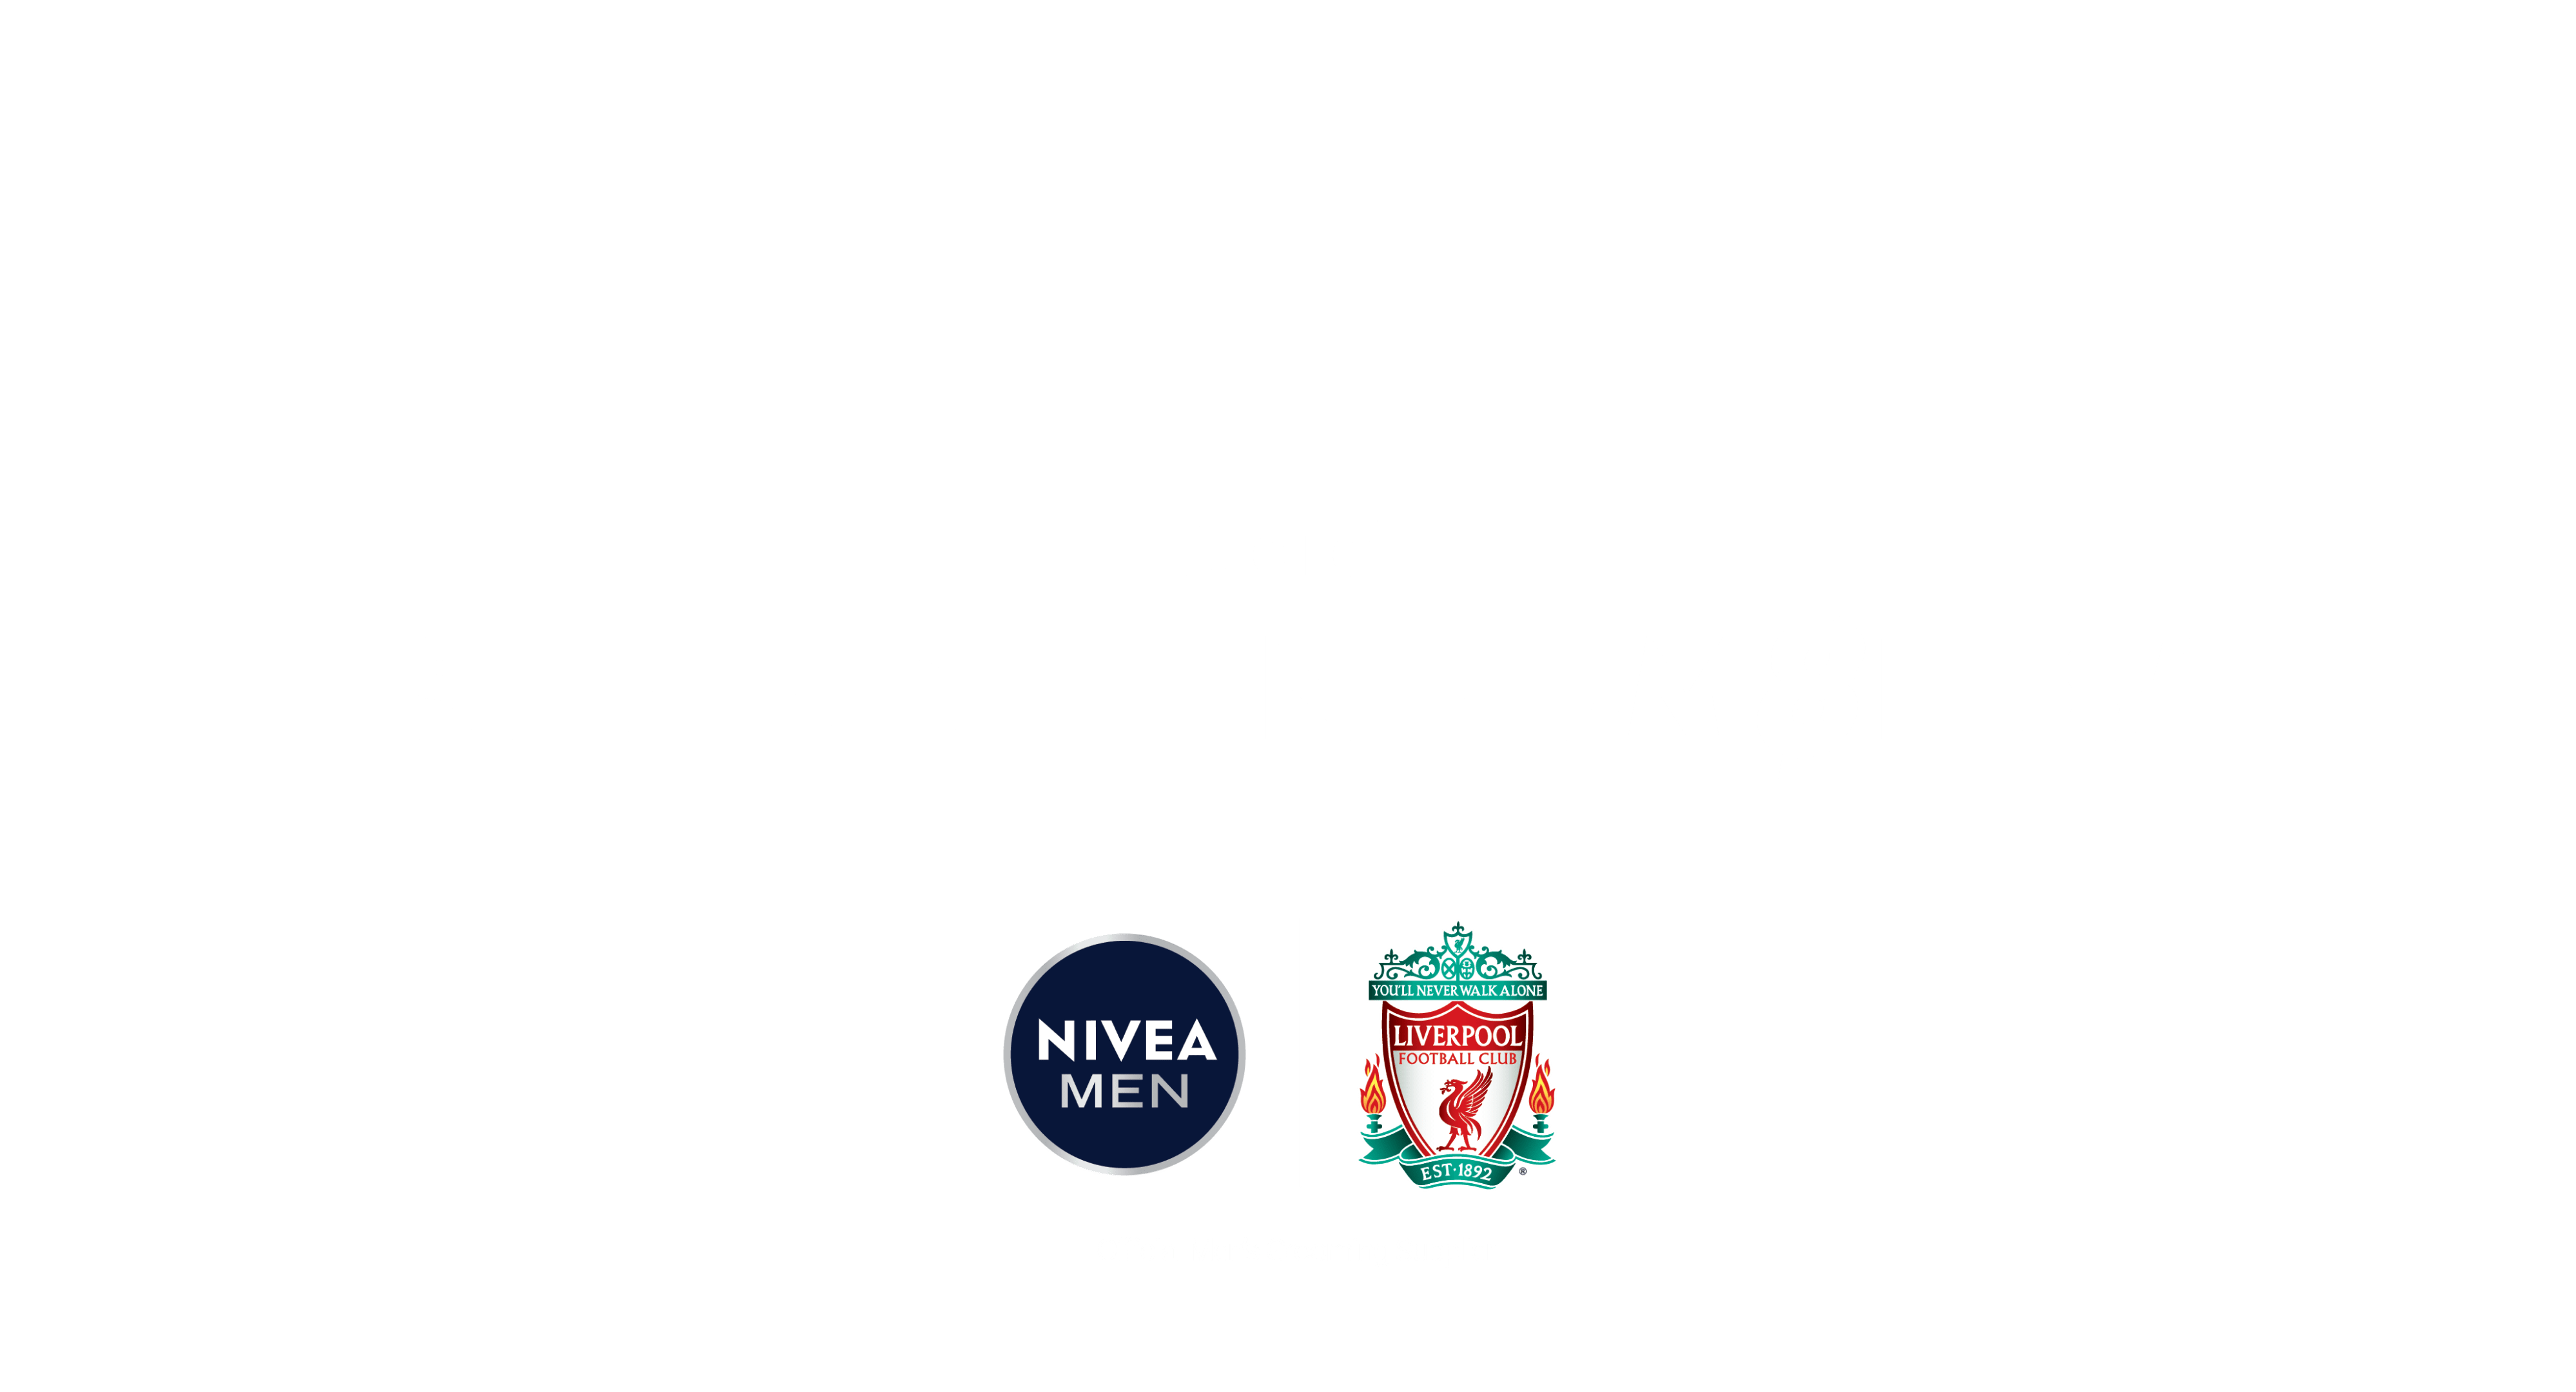 Strength in numbers - NIVEA